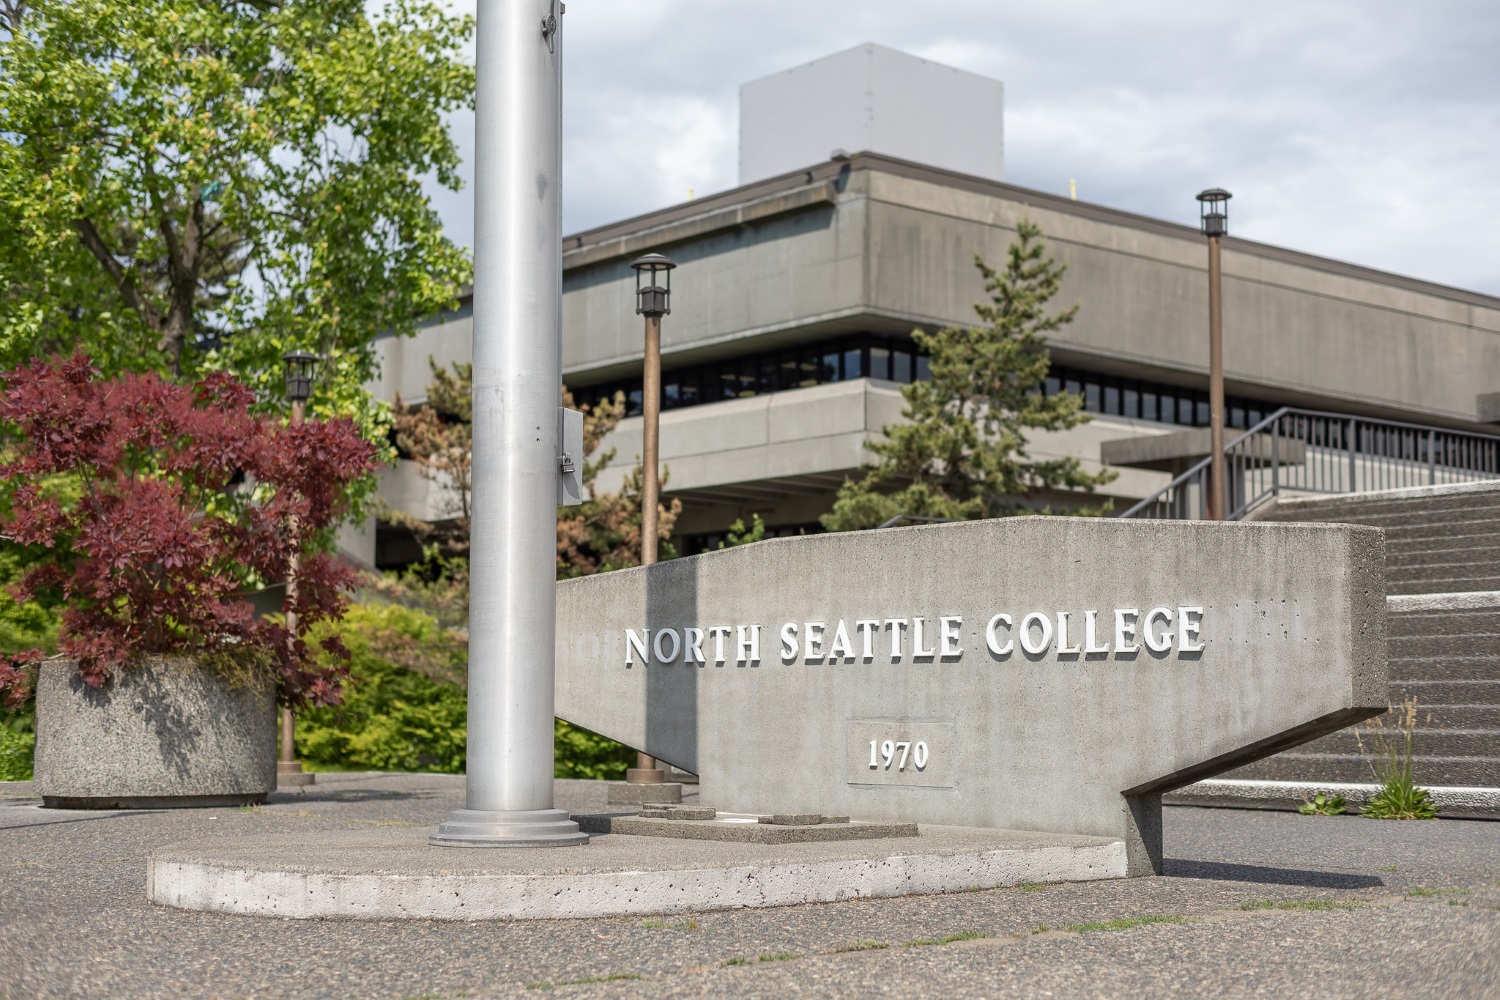 North Seattle College NewsCenter